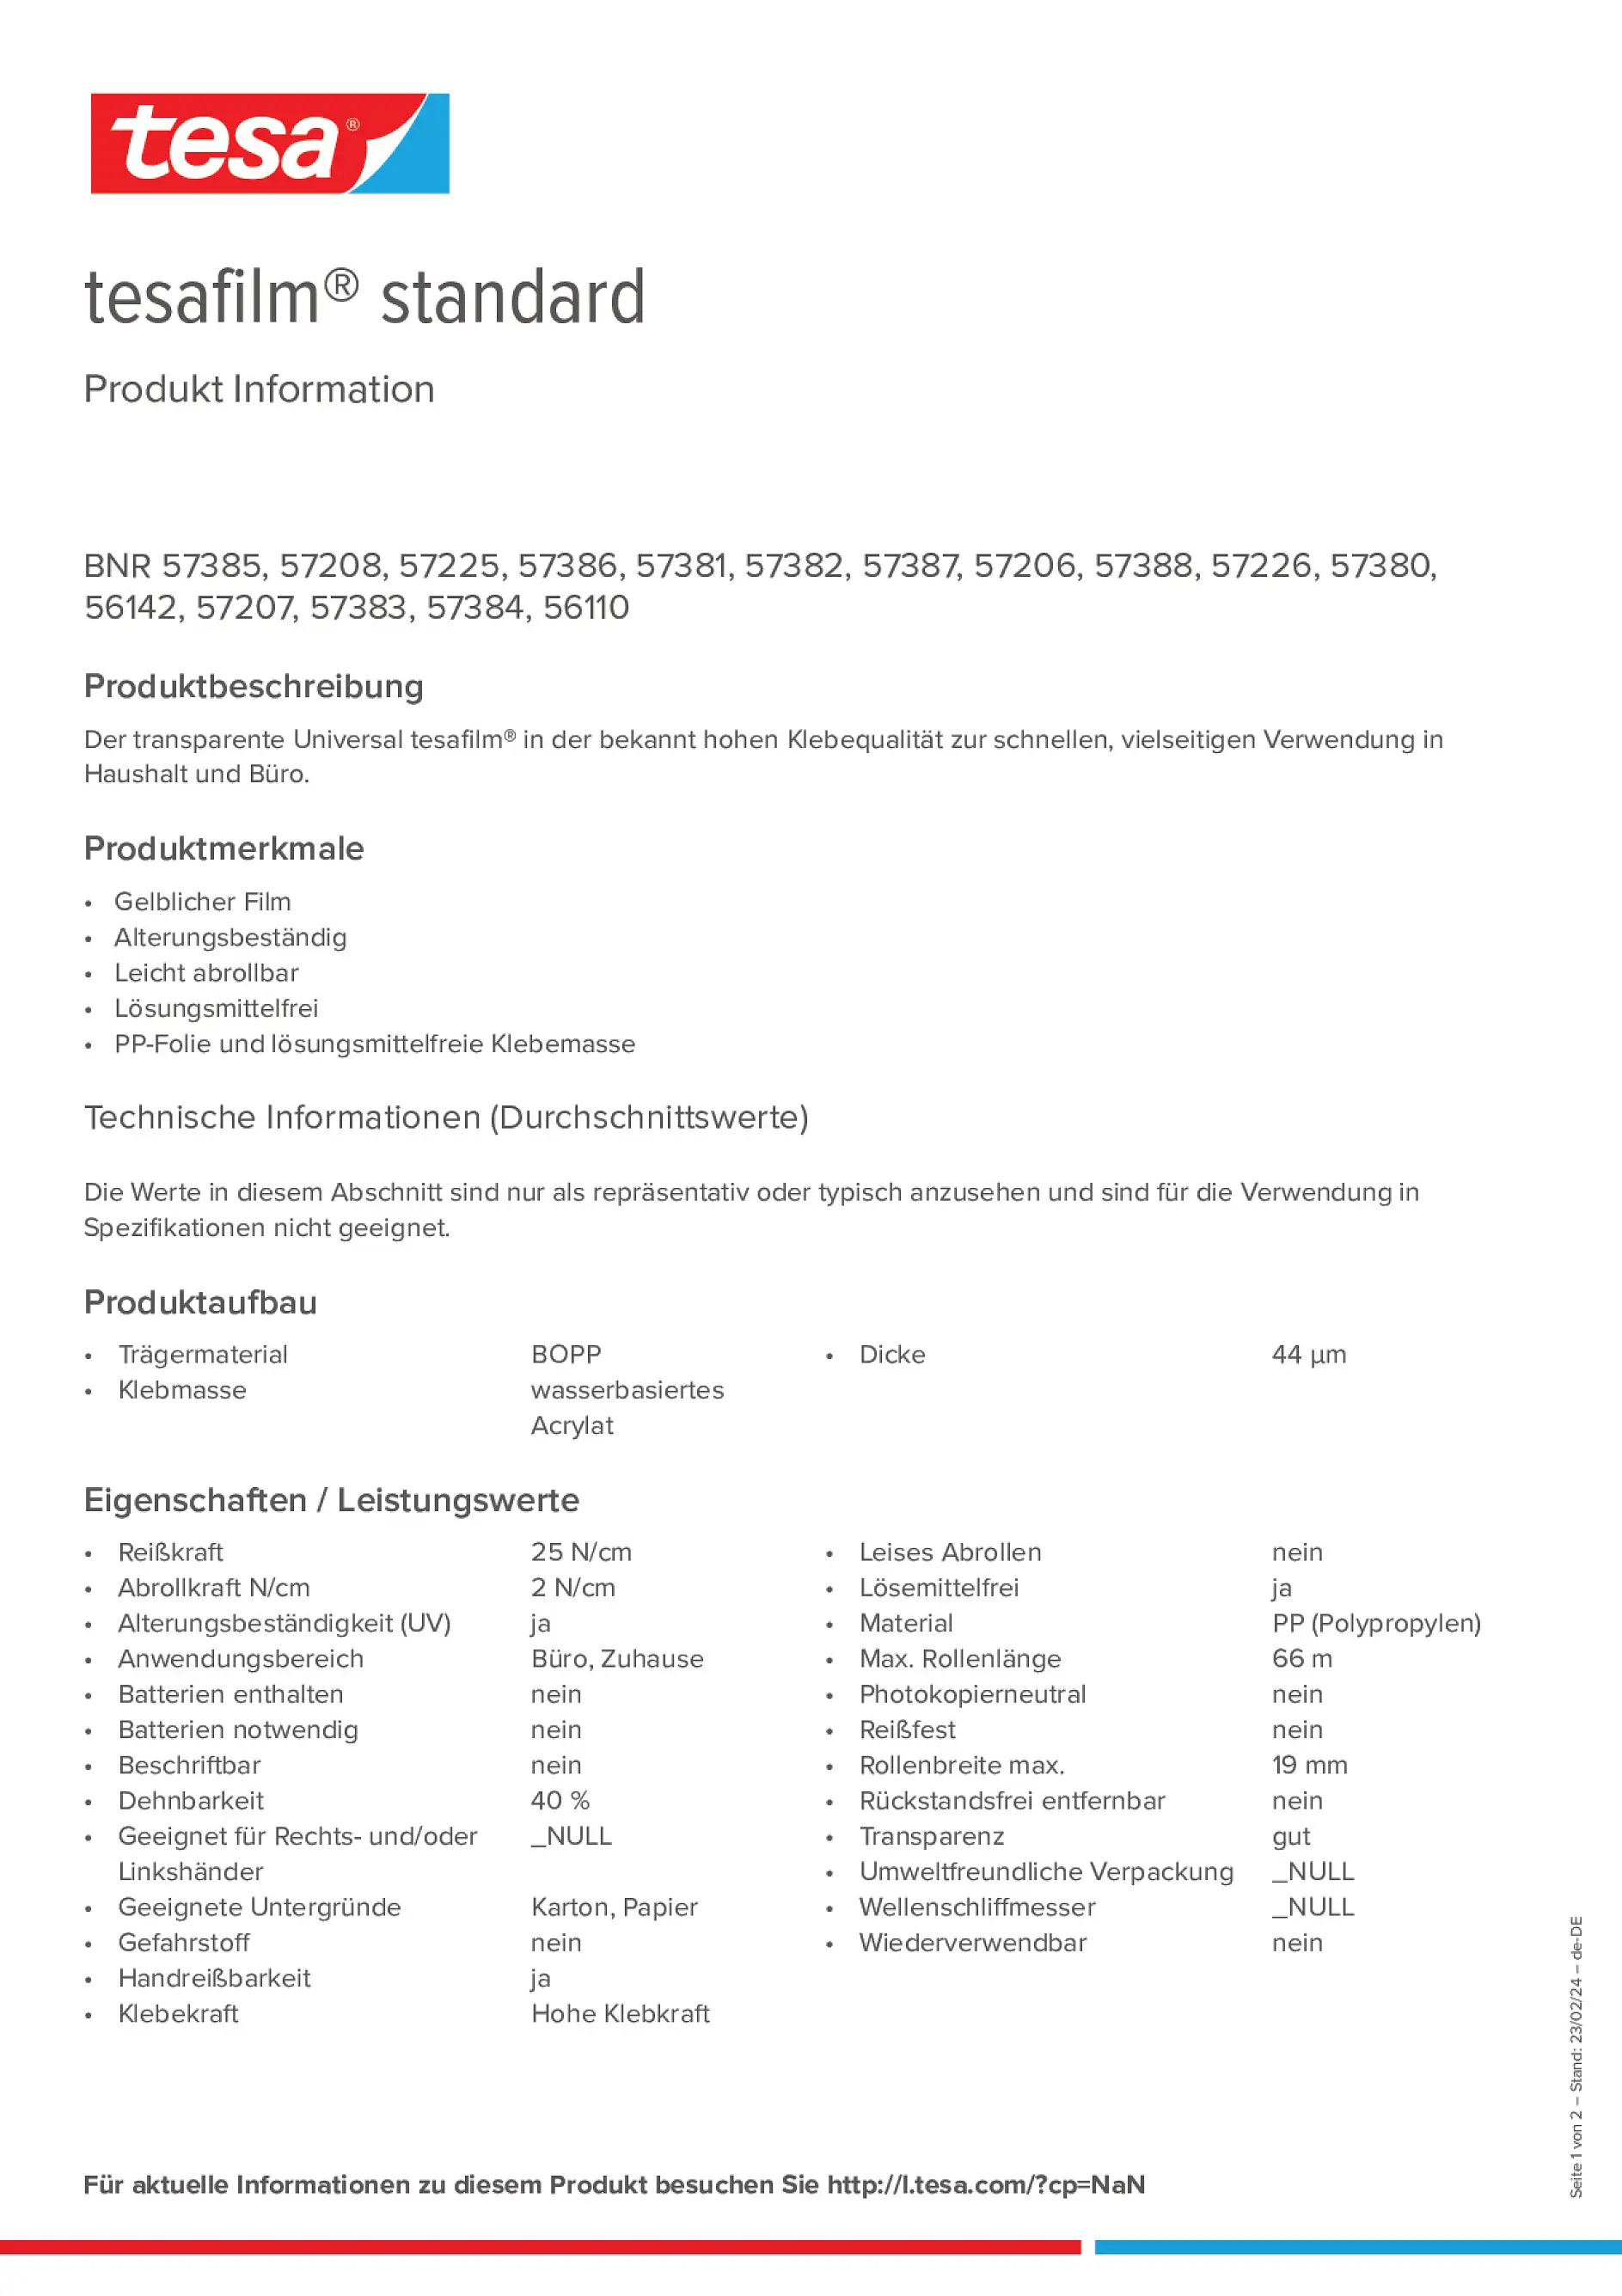 Product information_tesafilm® 57226_de-DE